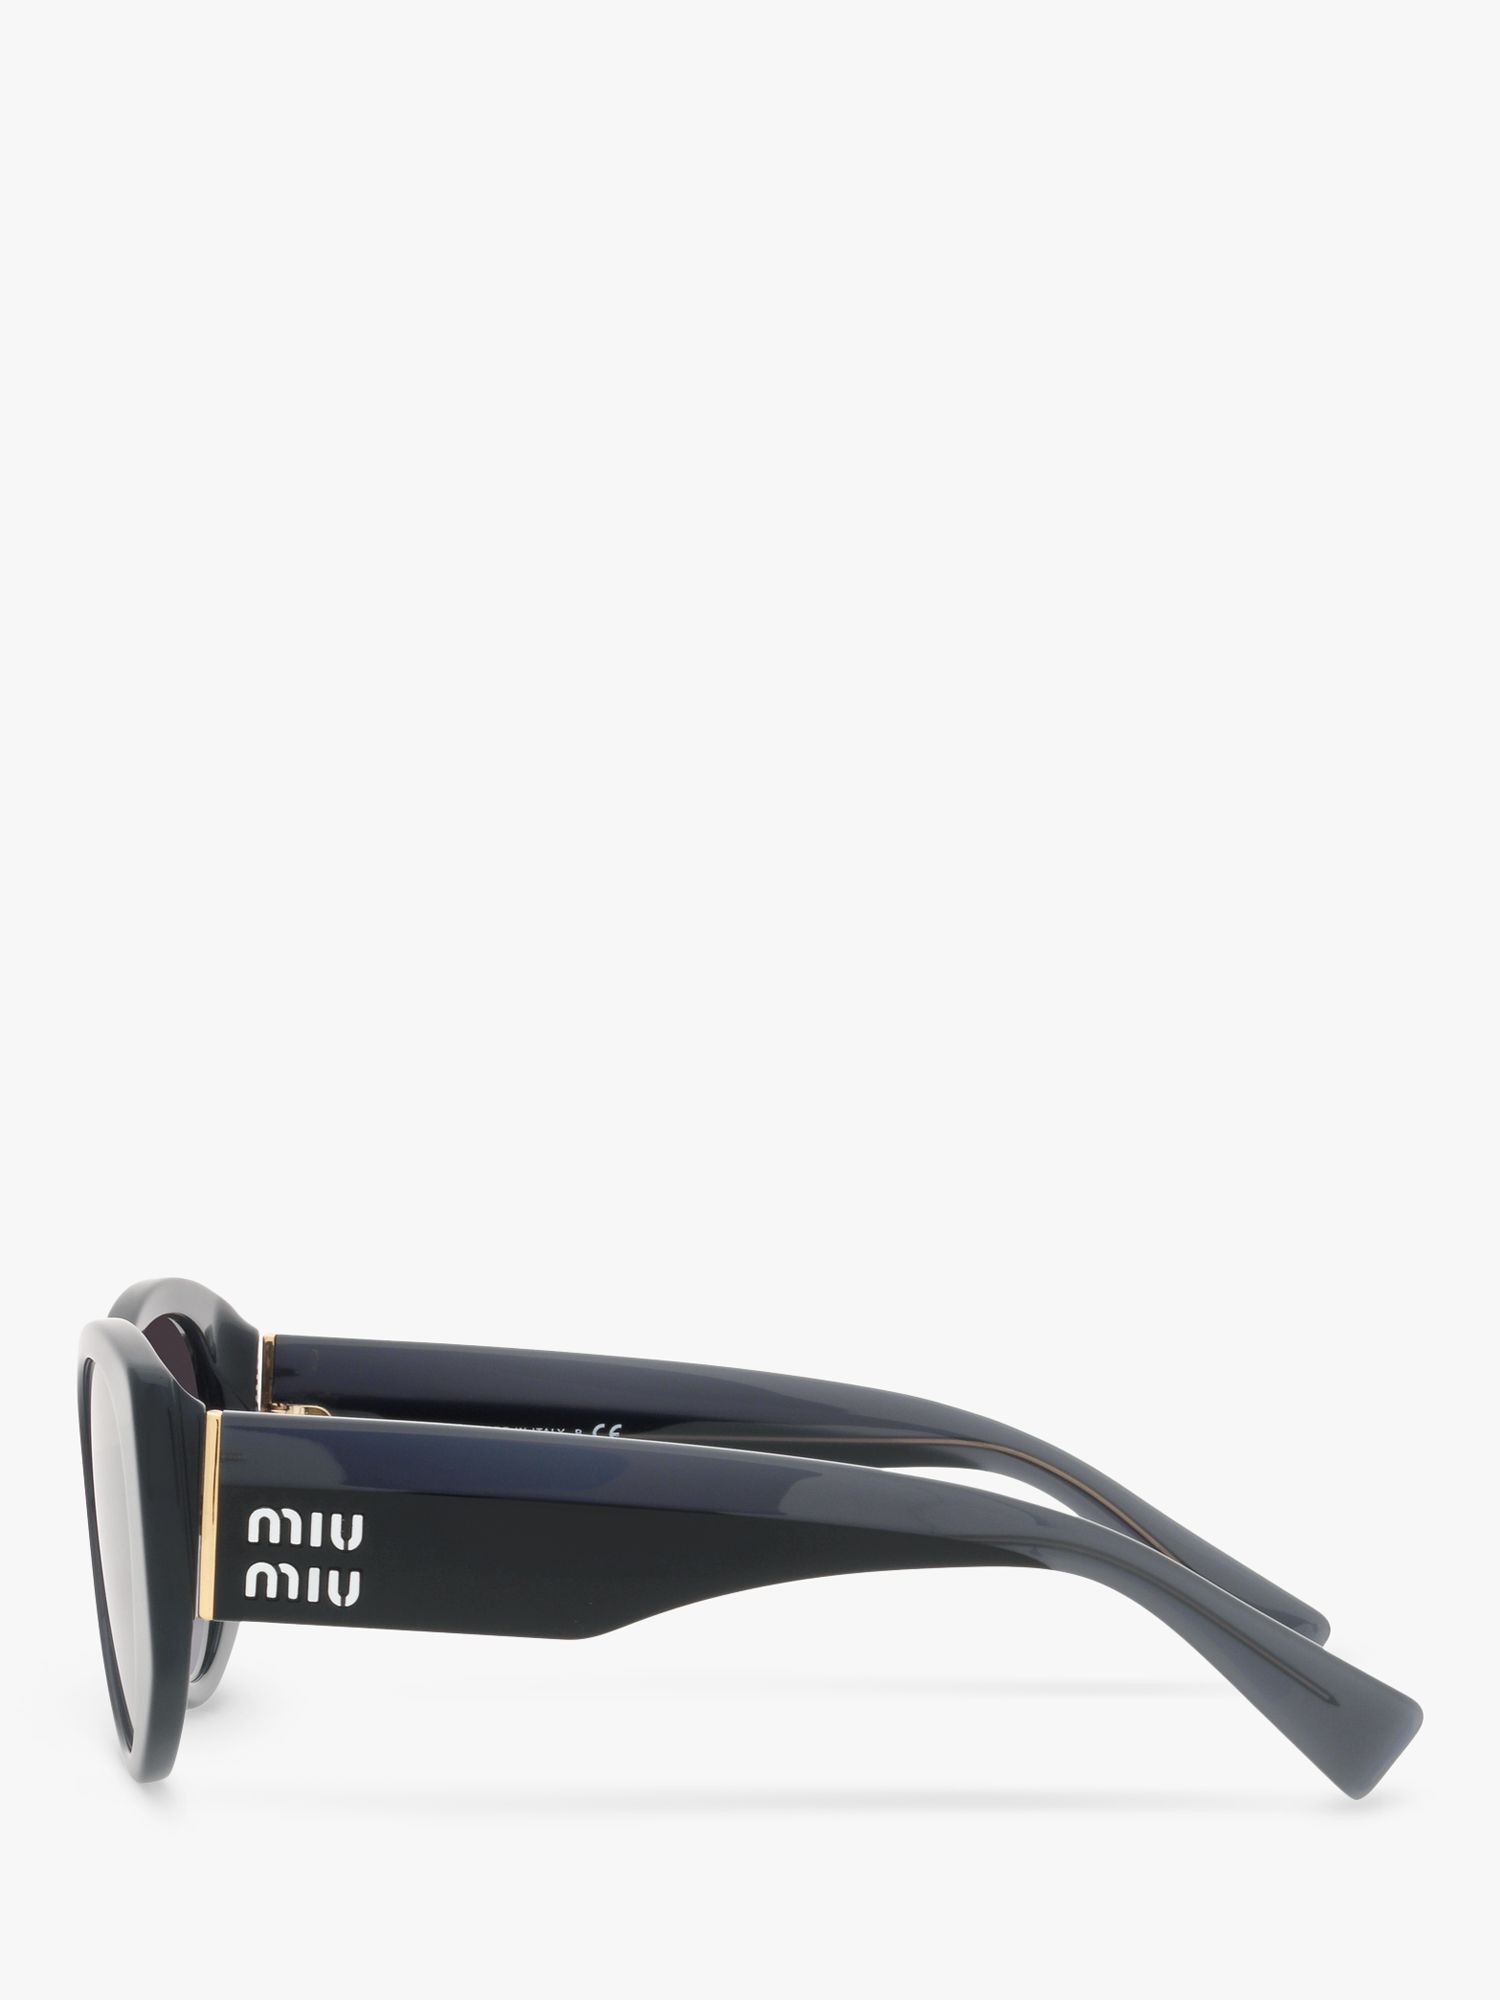 Miu Miu MU 03WS Women's Irregular Sunglasses, Grey Opal/Grey Gradient